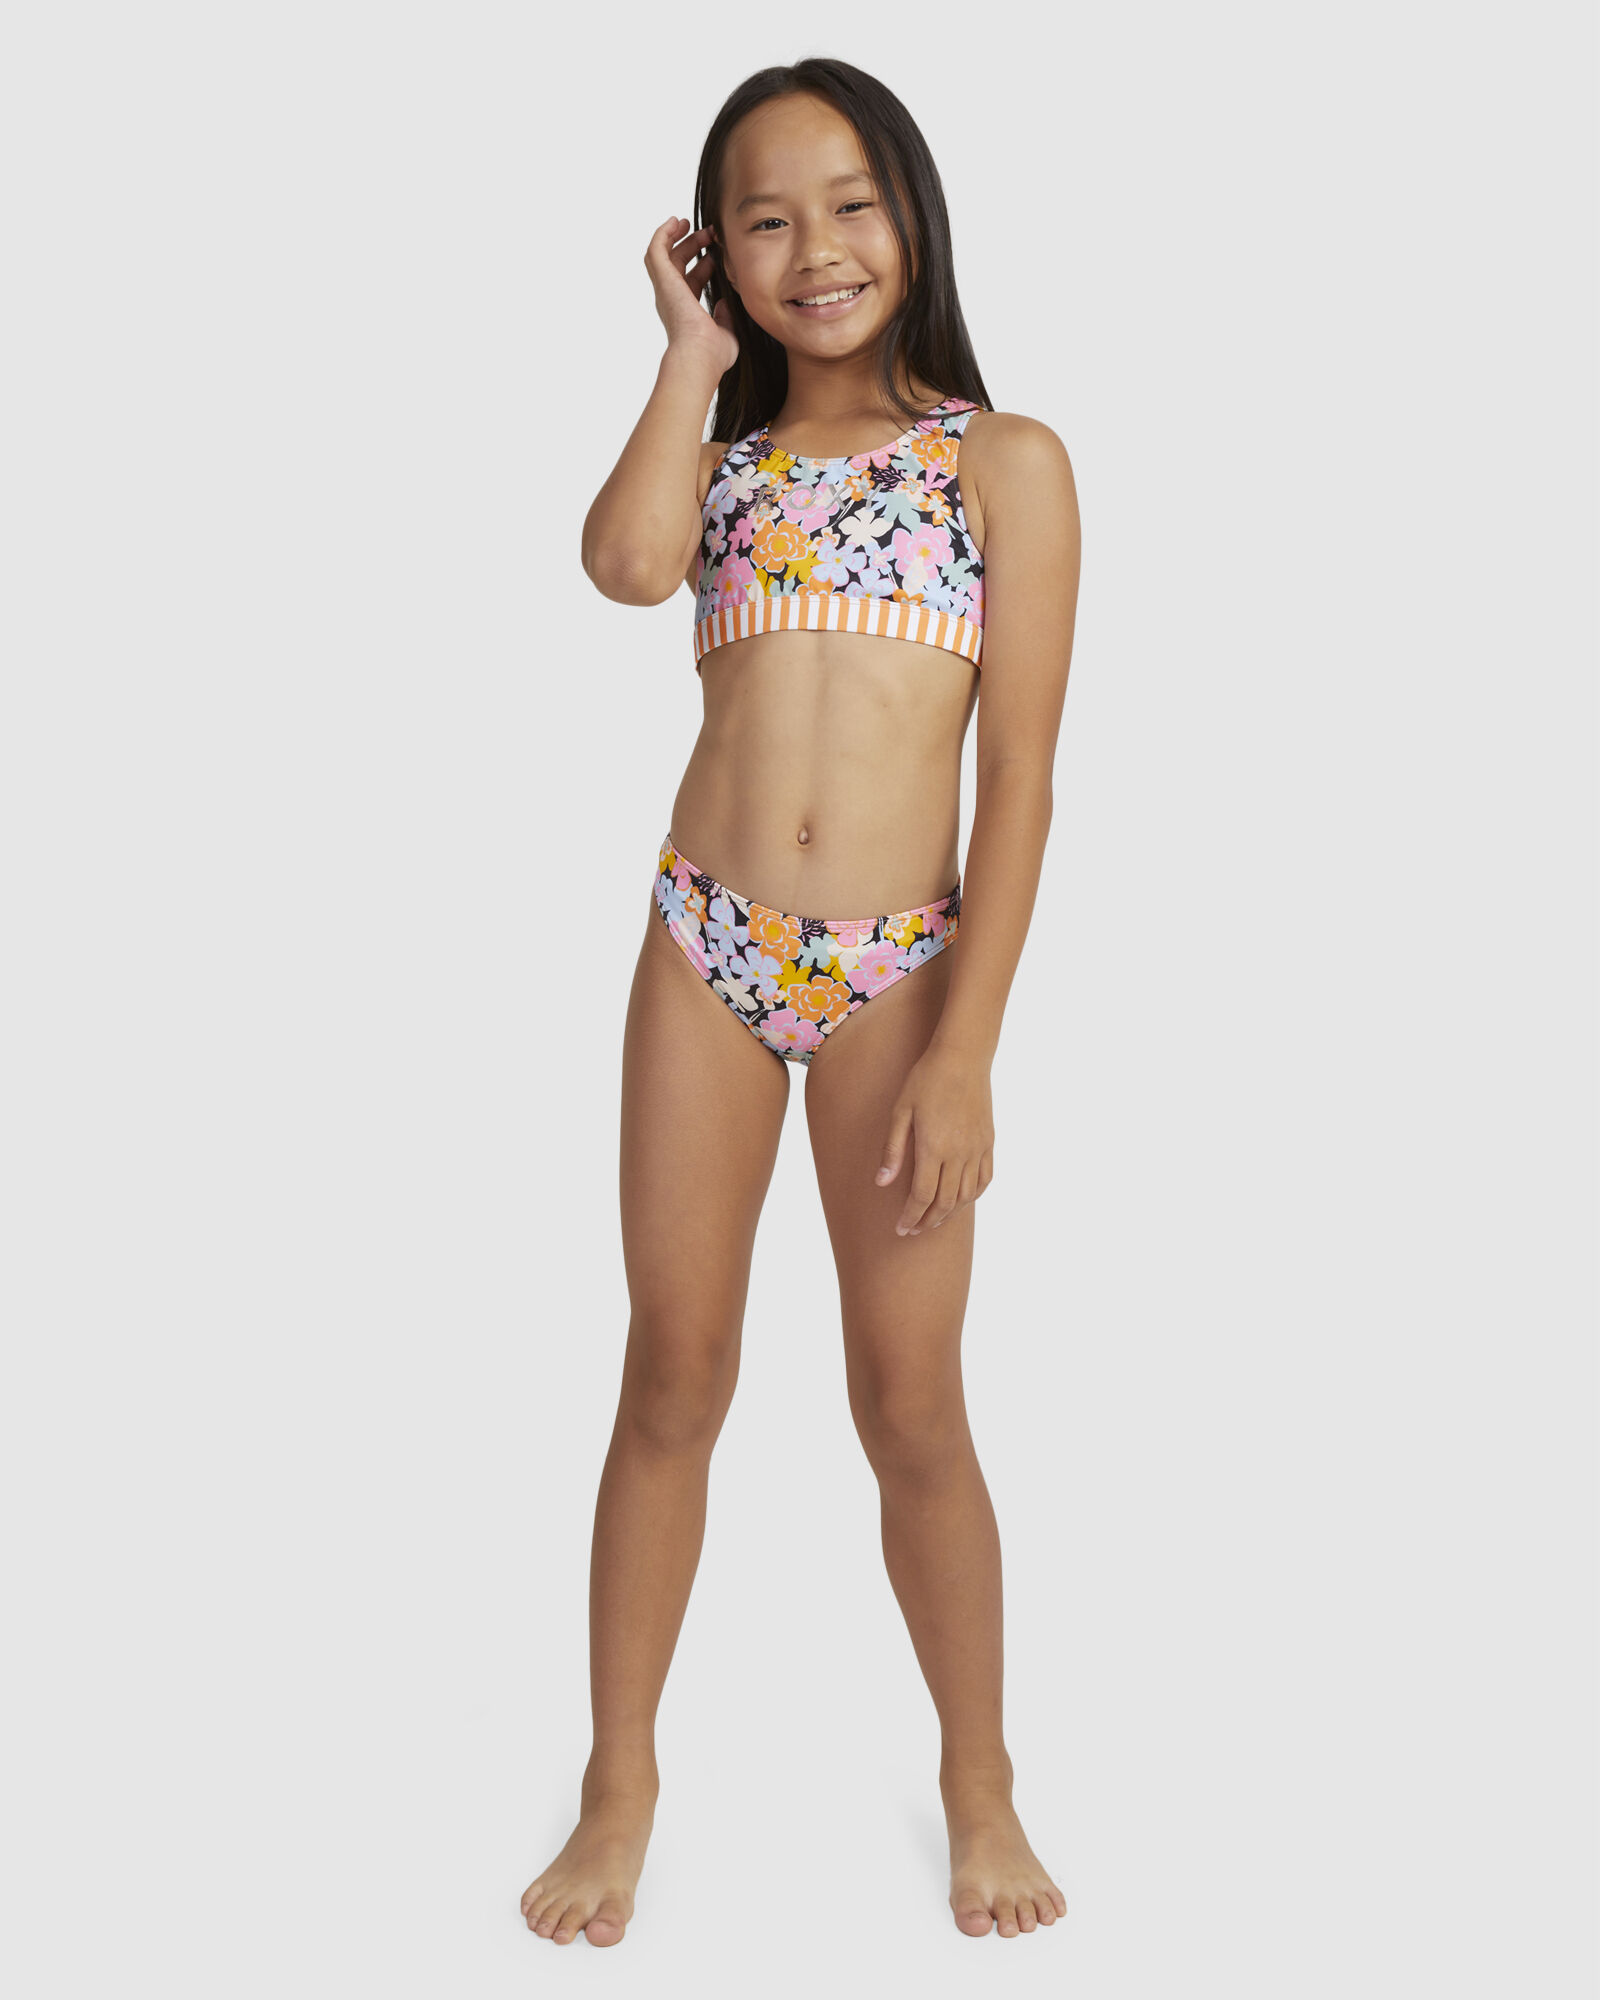 bikni girls Two-piece printed bikini girls beach bathing suit - AliExpress